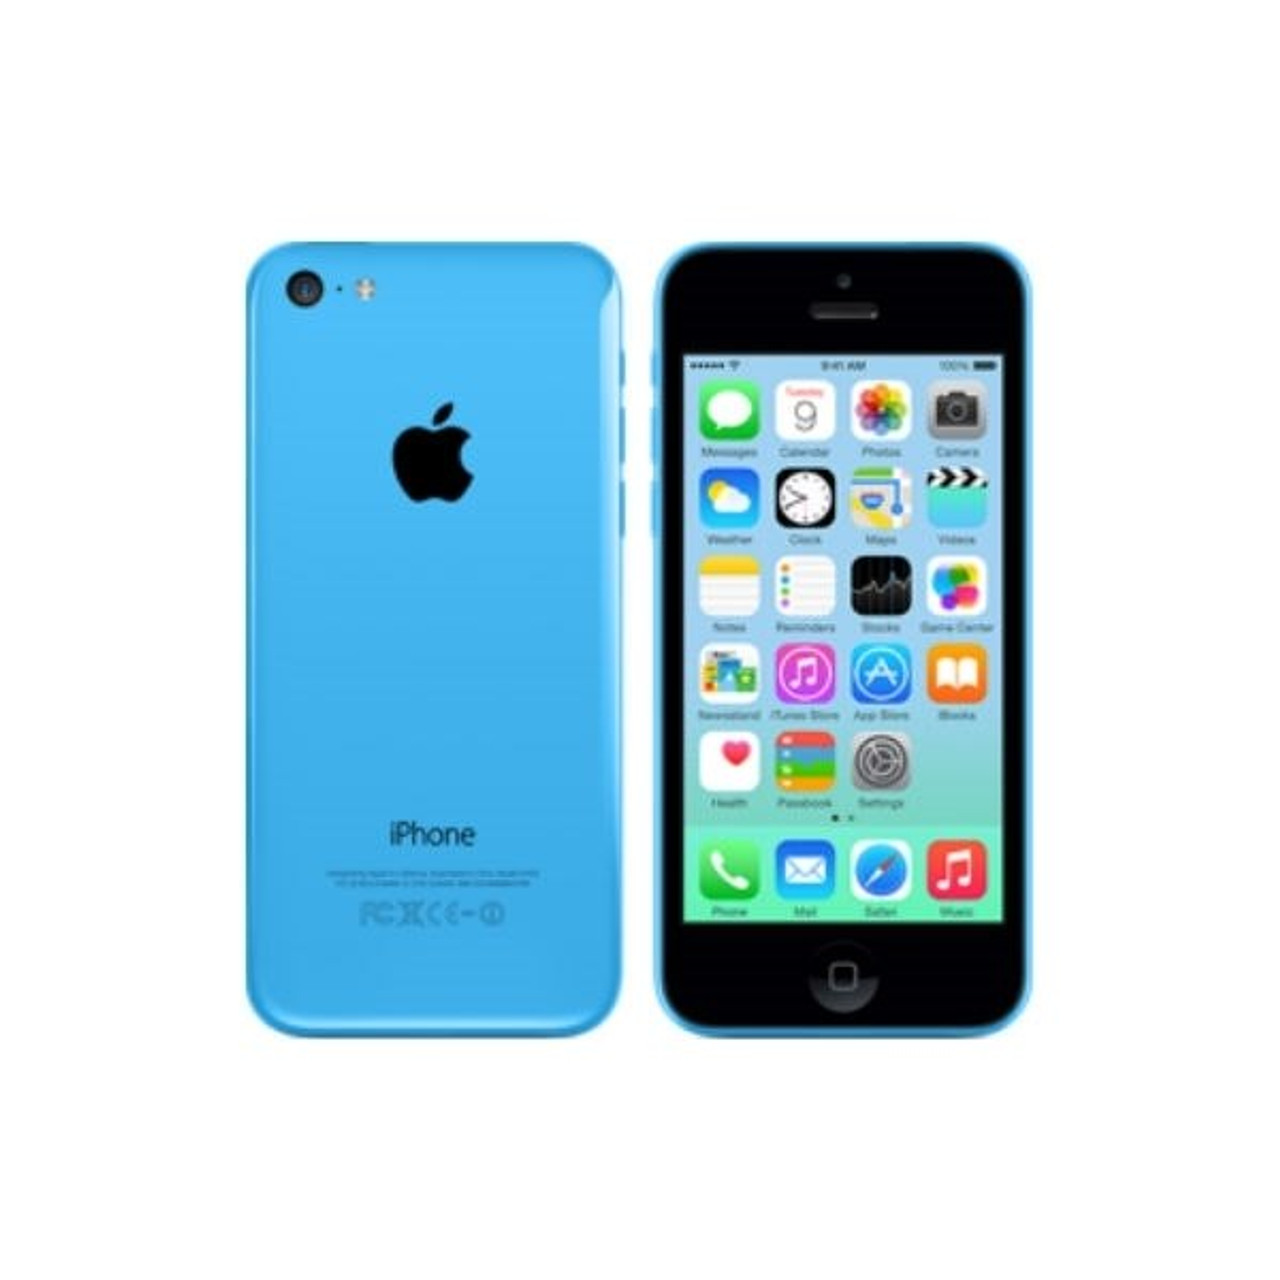 Apple iPhone 5c (Unlocked) 16GB - Blue NE555LL/A - Very Good Condition